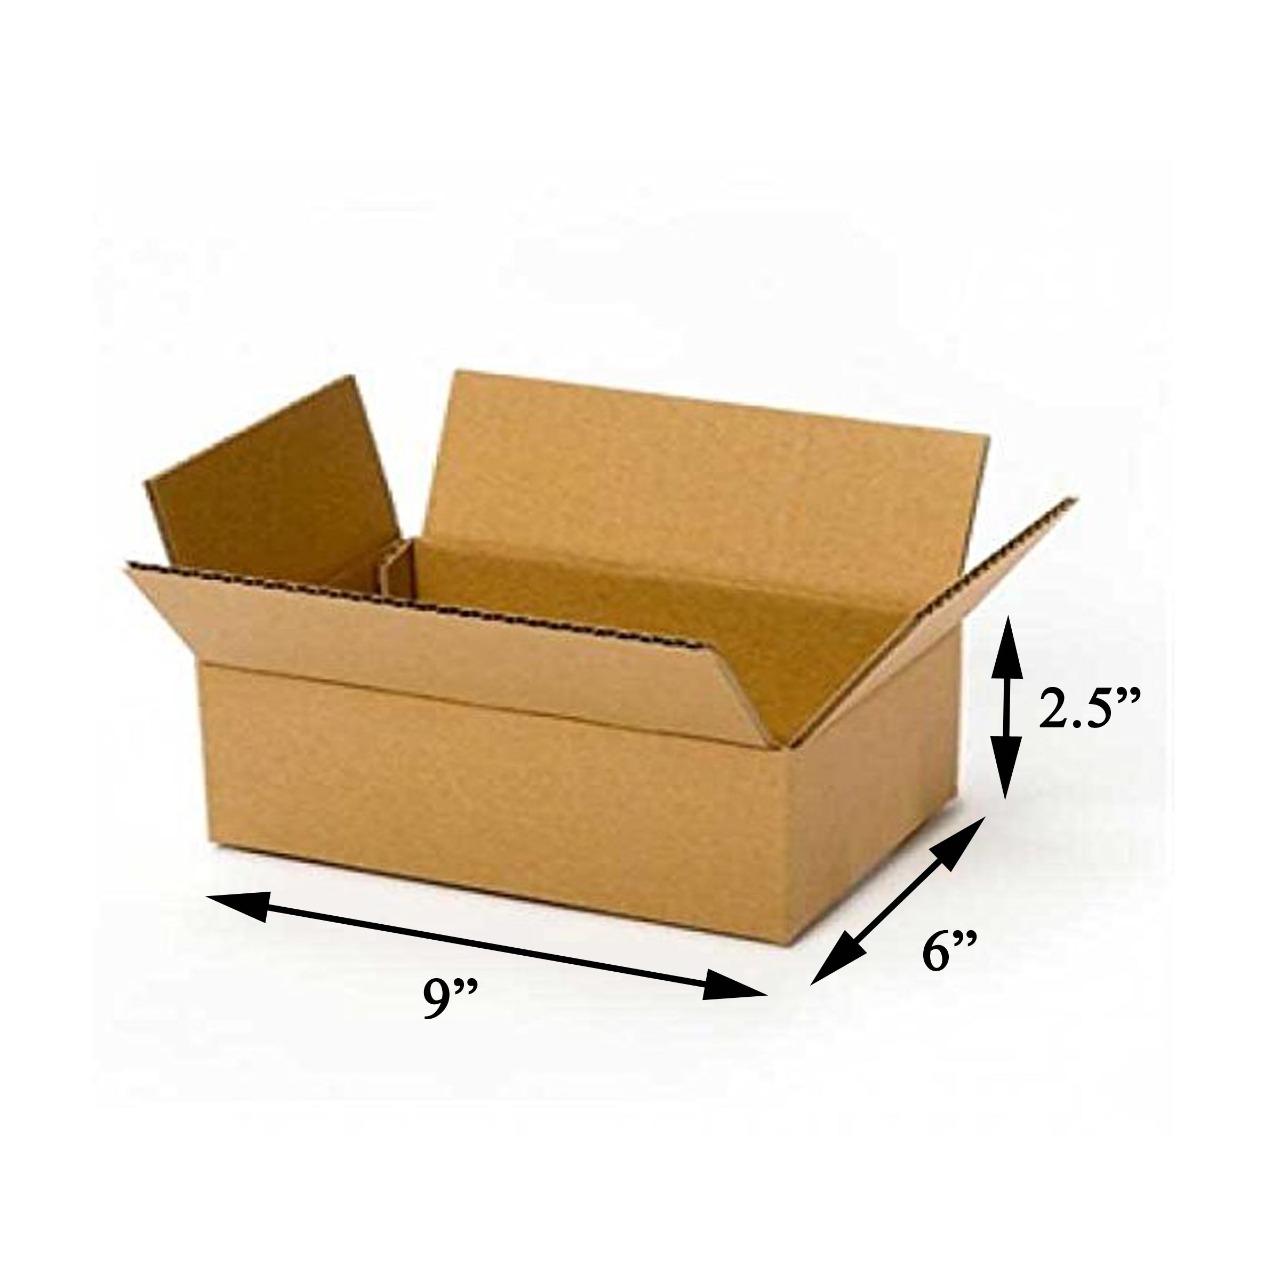 9 6 2.5 inch Corrugated box and carton box near me cardboard boxes for ...